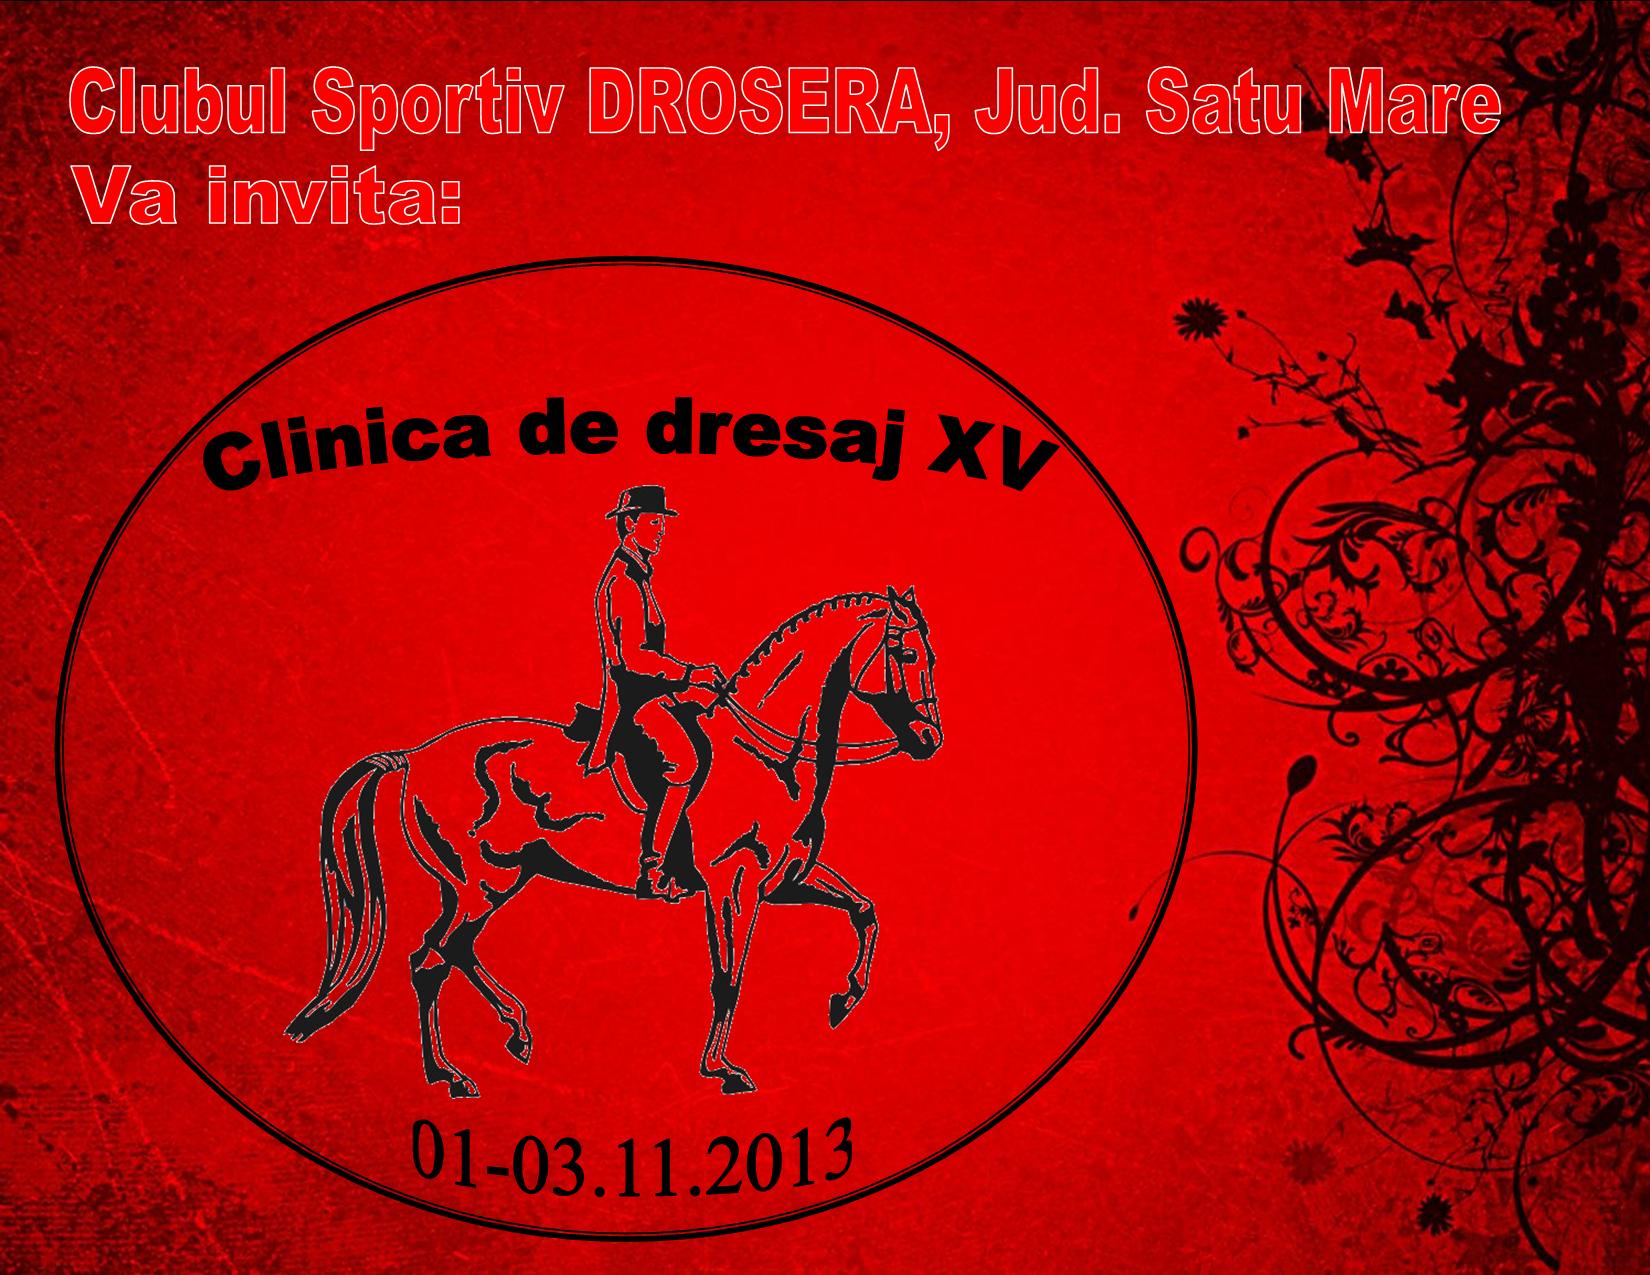 01-03.11.2013 CLINICA DE DRESAJ XV, Clubul Sportiv Drosera, Jud. Satu Mare